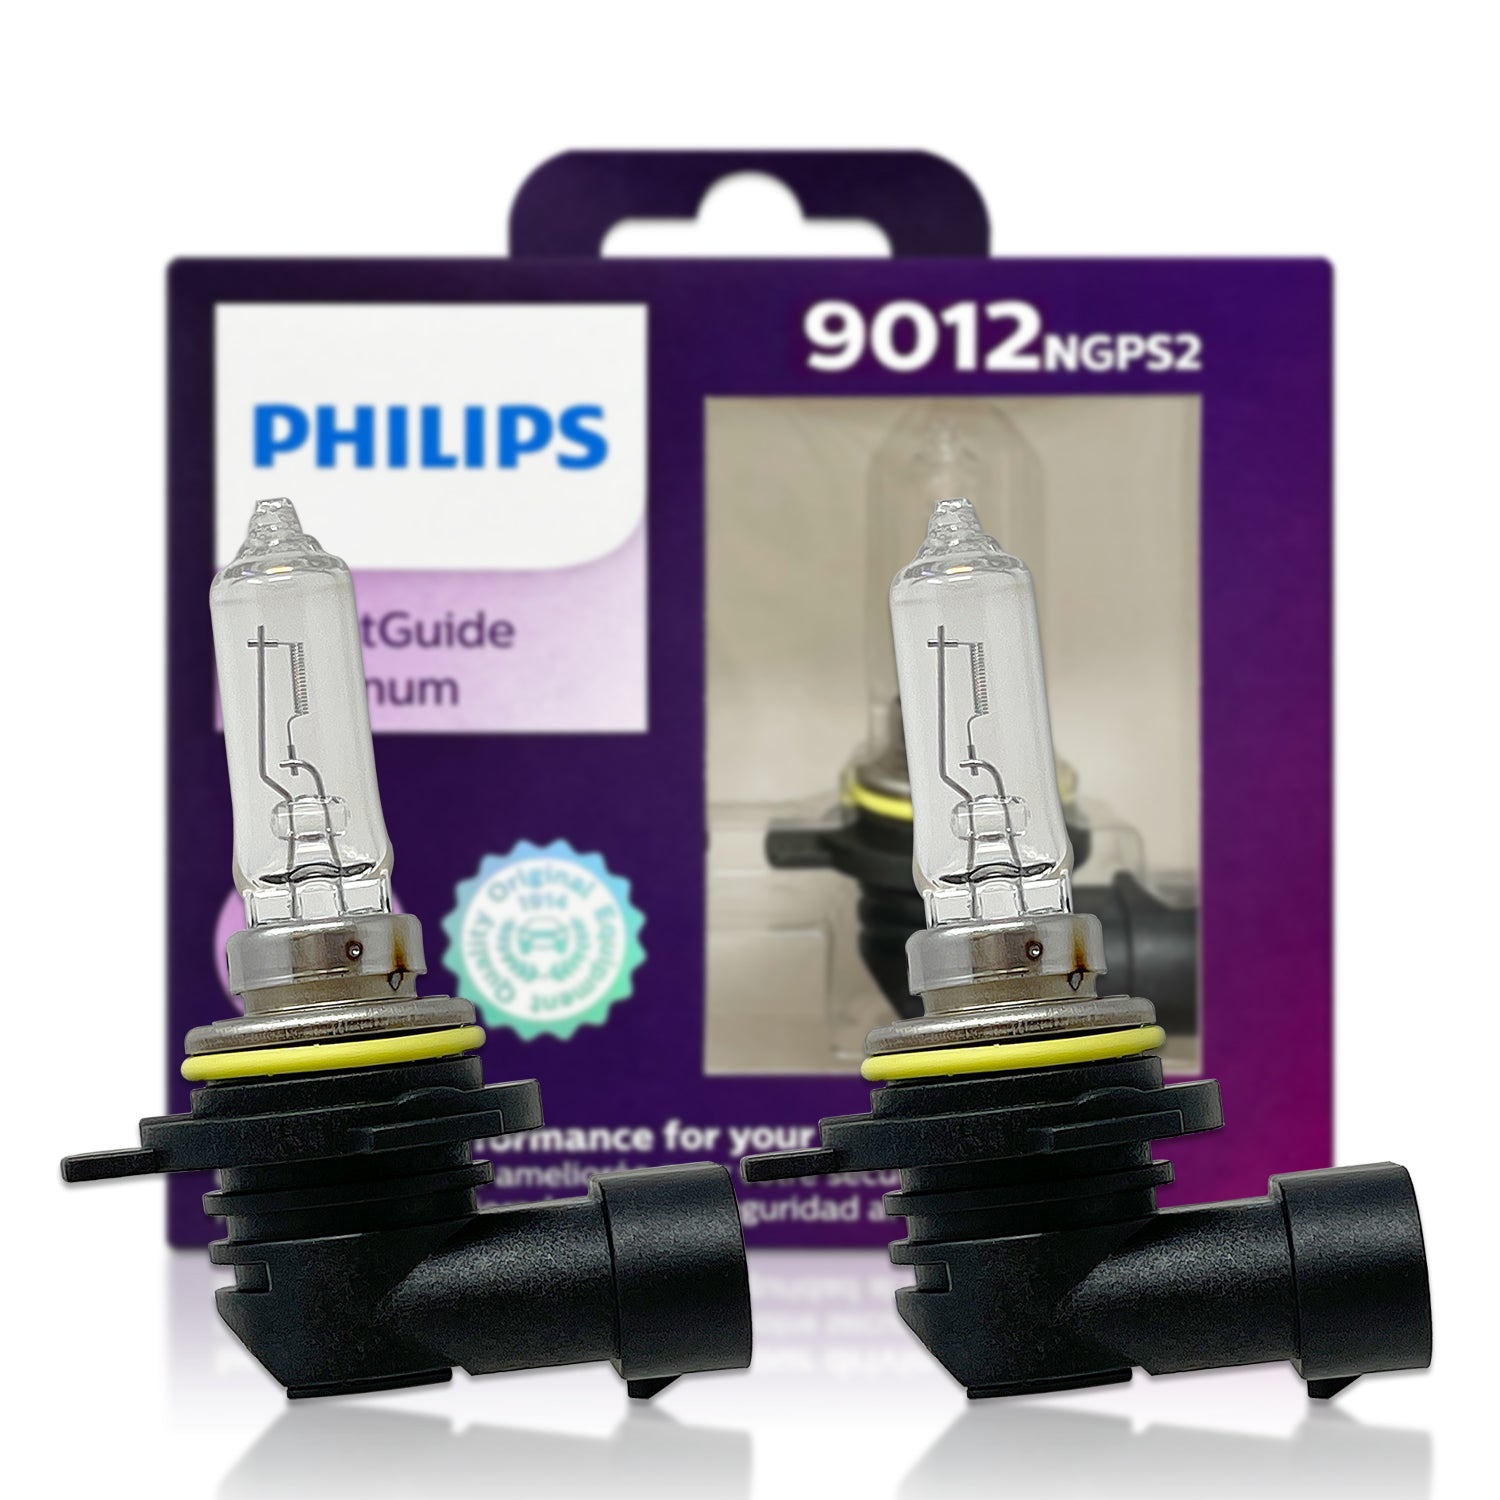 9012 - Philips 9012NGPS2 NightGuide Platinum Bulbs